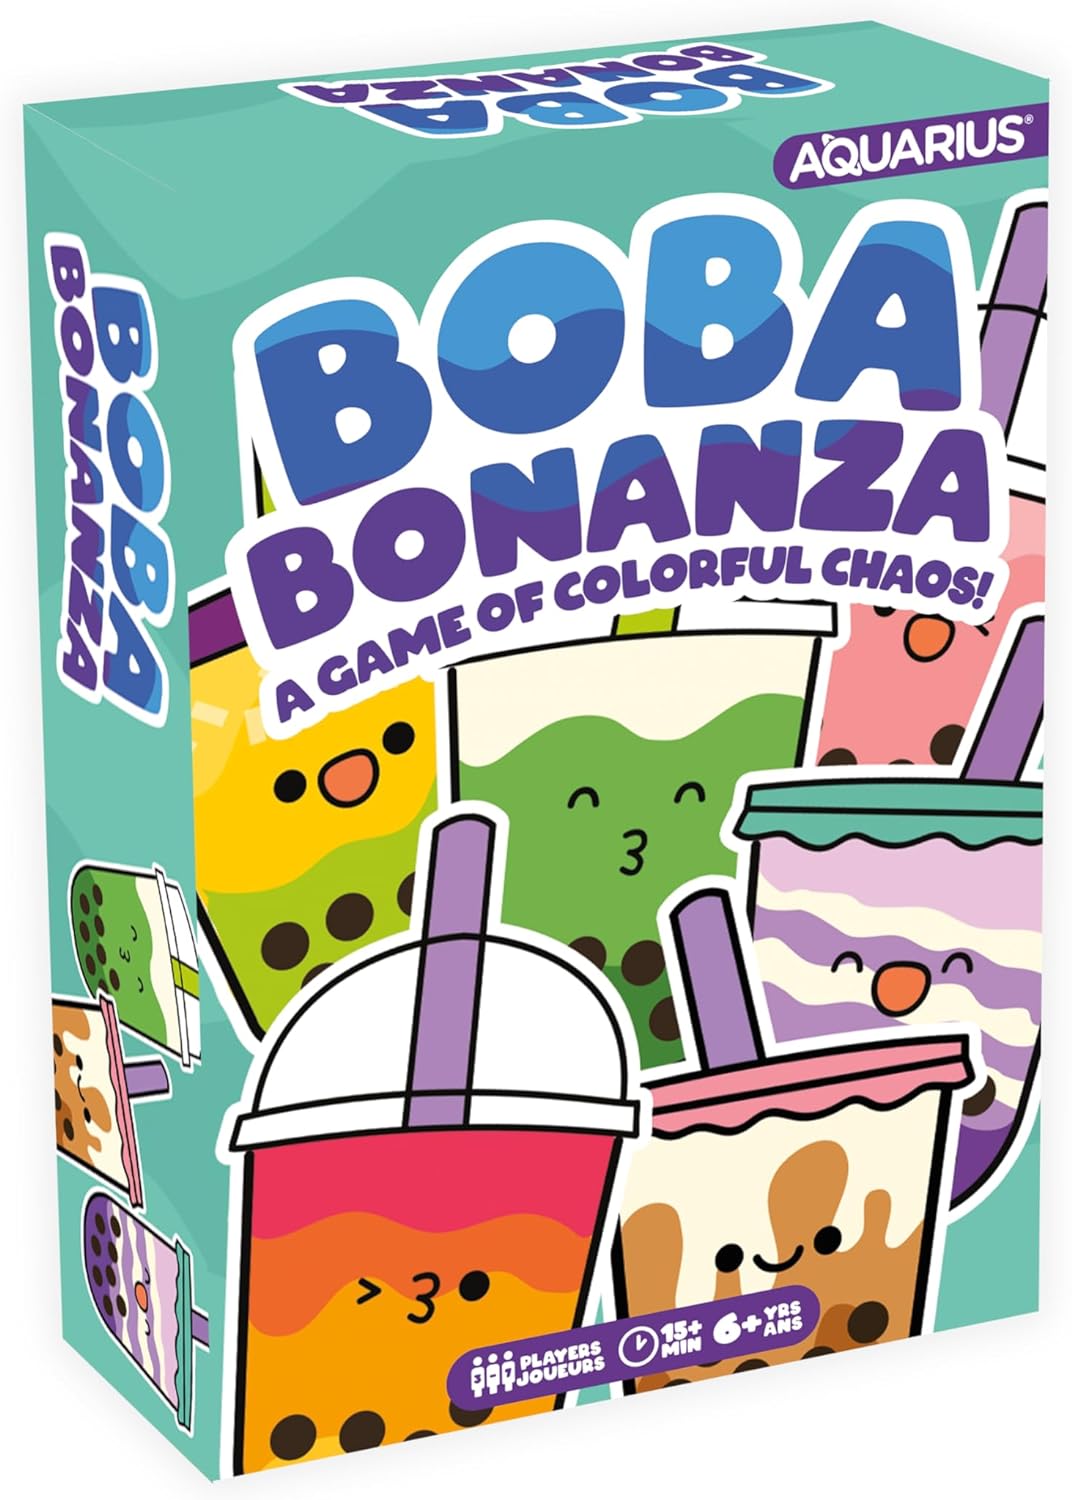 Boba Bonanza | A Game of Colorful Chaos